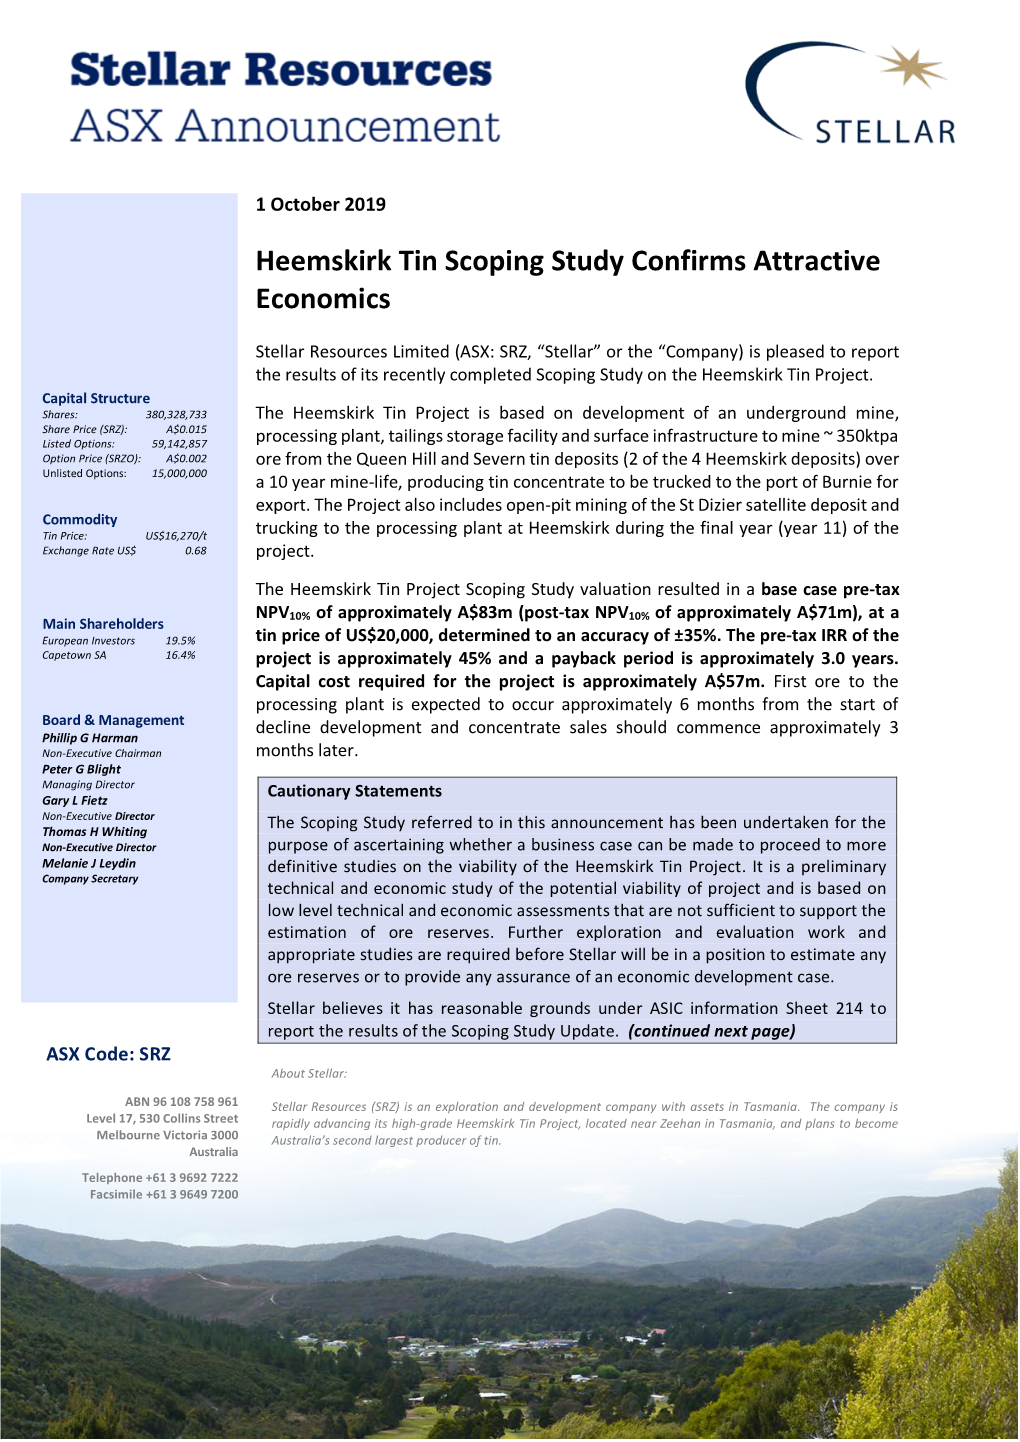 Heemskirk Tin Scoping Study Confirms Attractive Economics